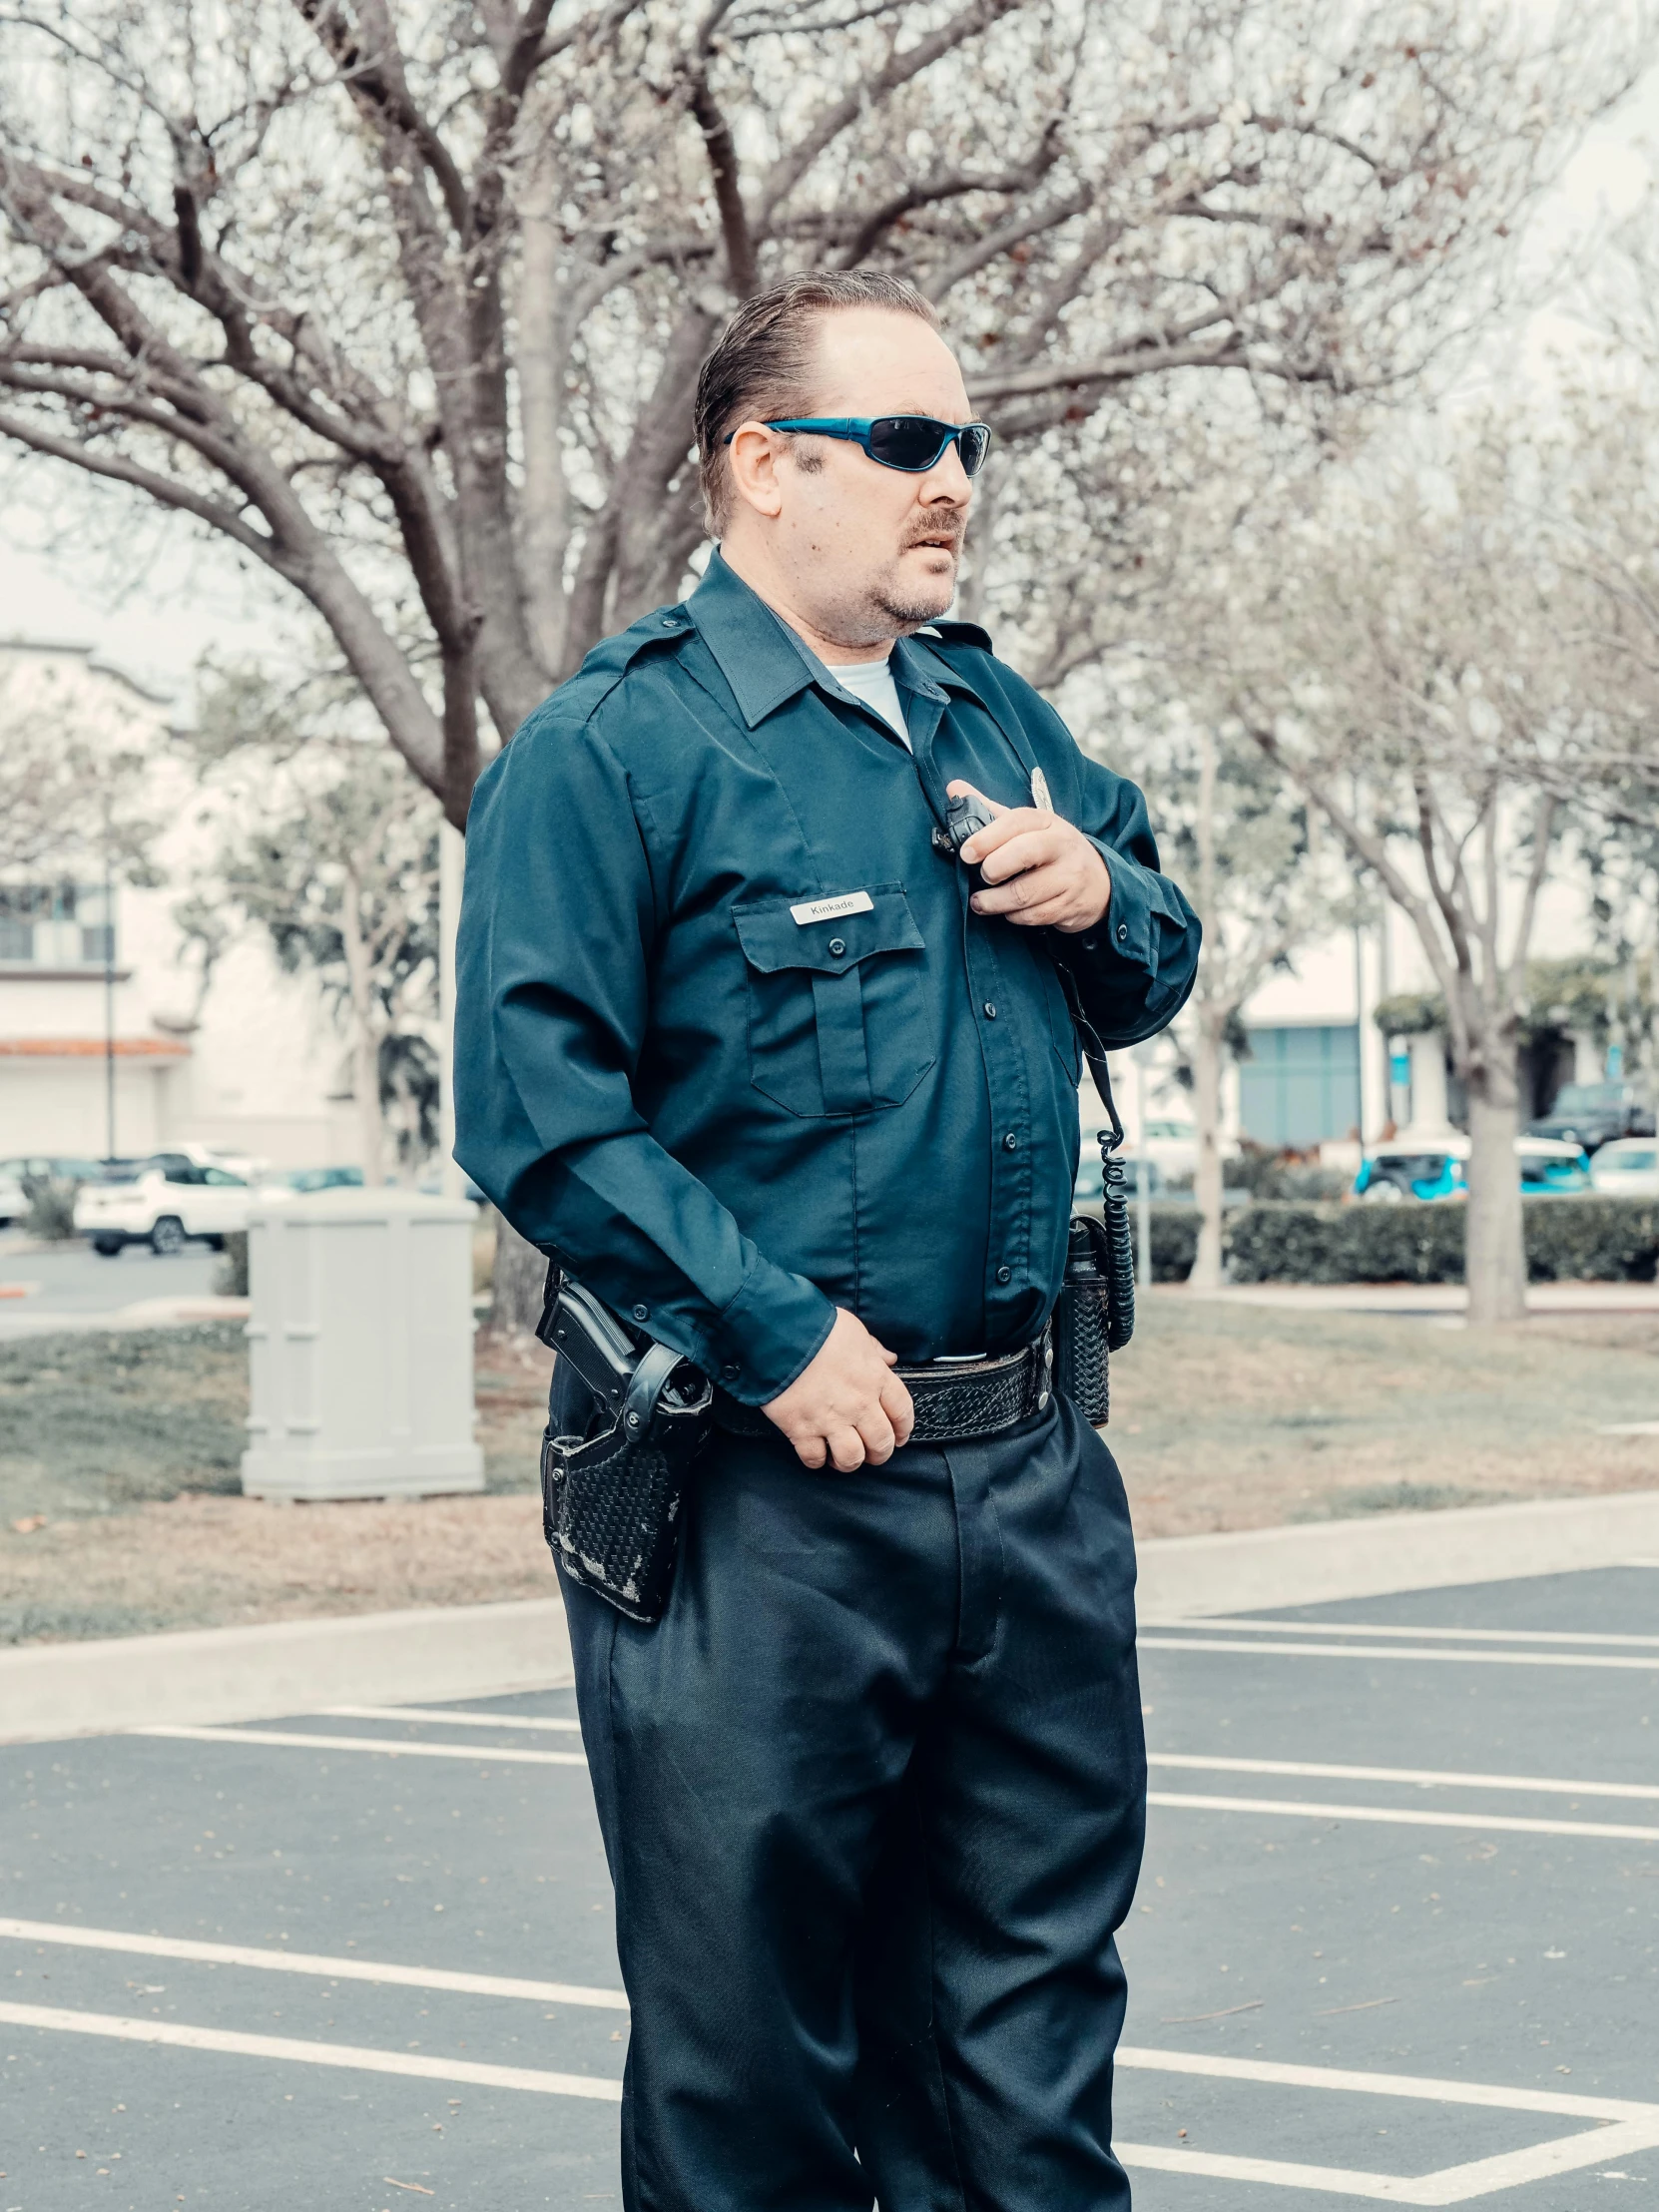 a police officer standing in a parking lot, by Ryan Pancoast, avant designer uniform, oc, profile image, teal uniform